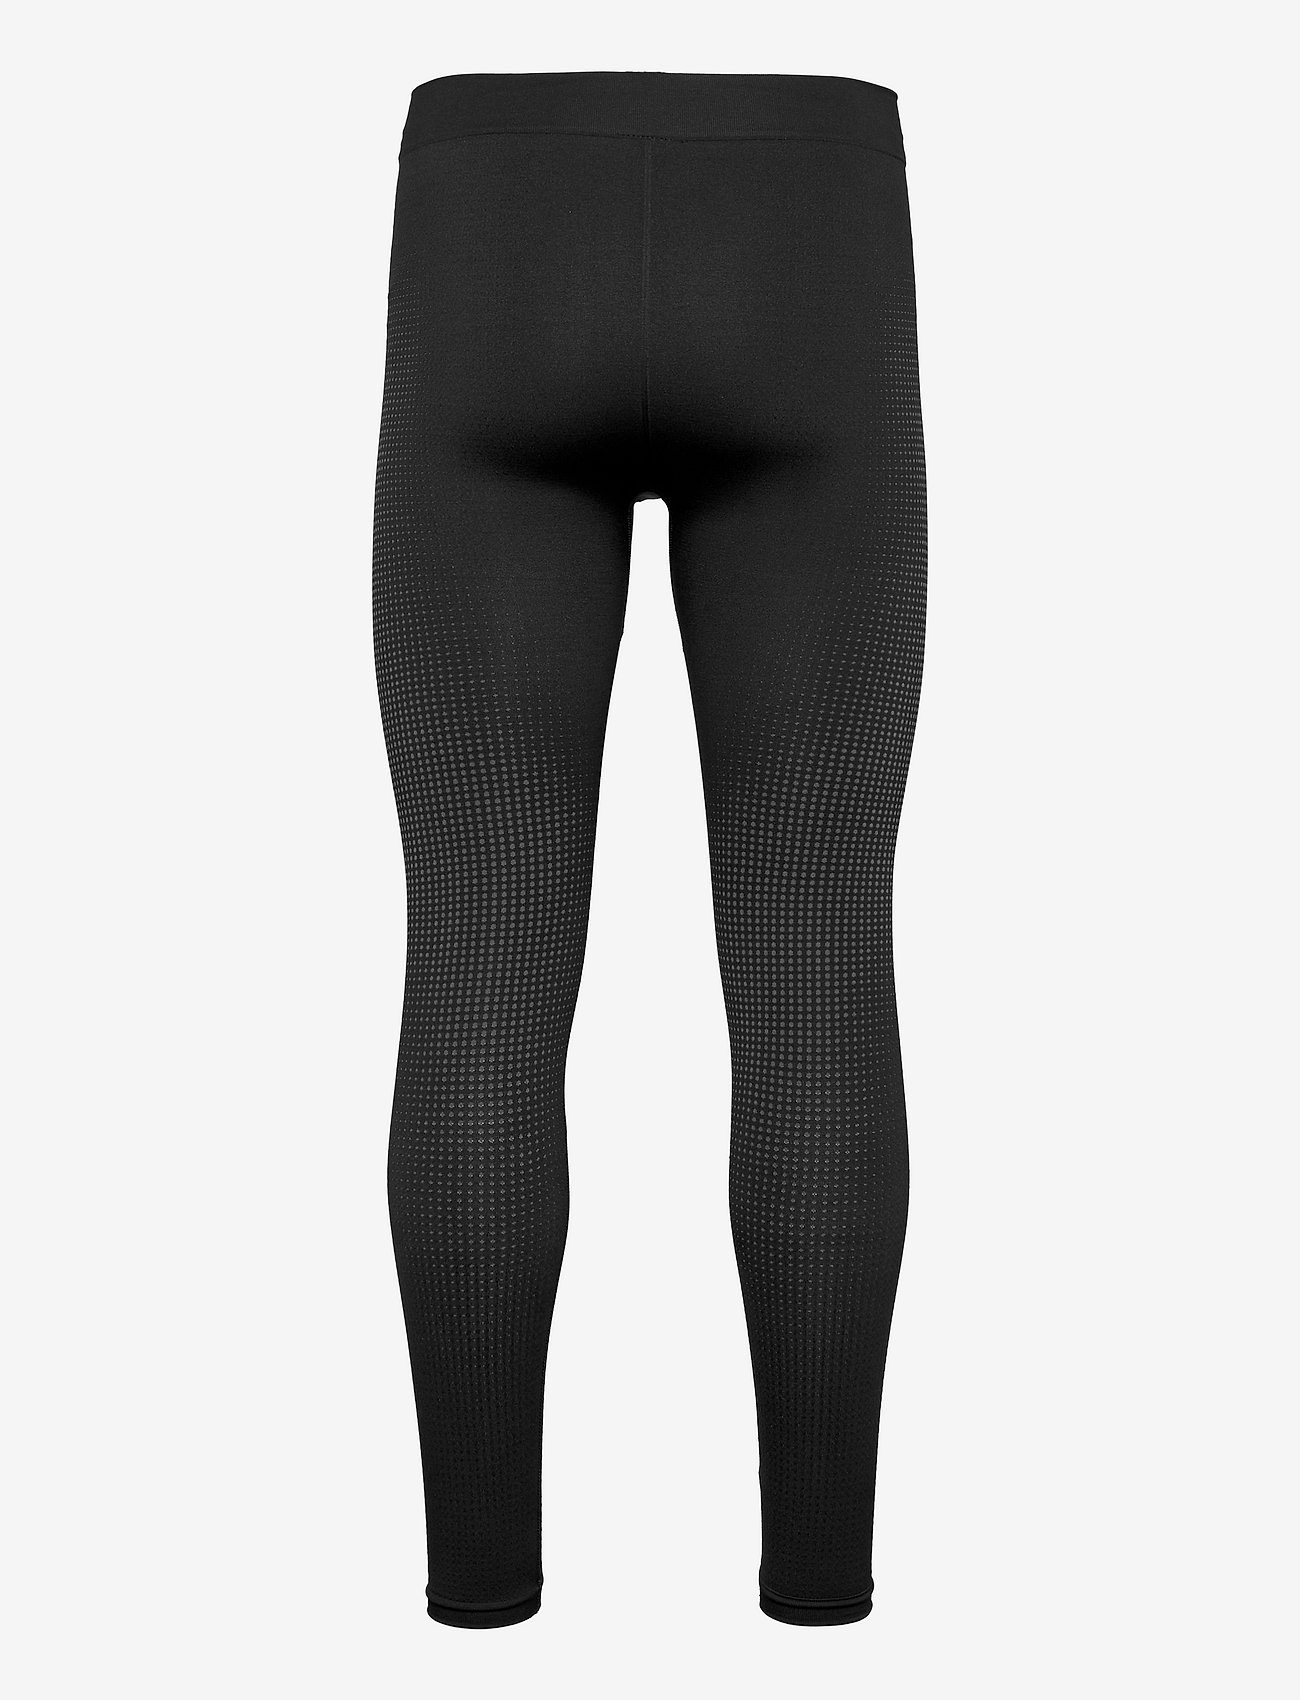 Odlo - Aluminium Pants Performance Warm ECO - funkionsunterwäsche - hosen - black - new odlo graphite grey - 1